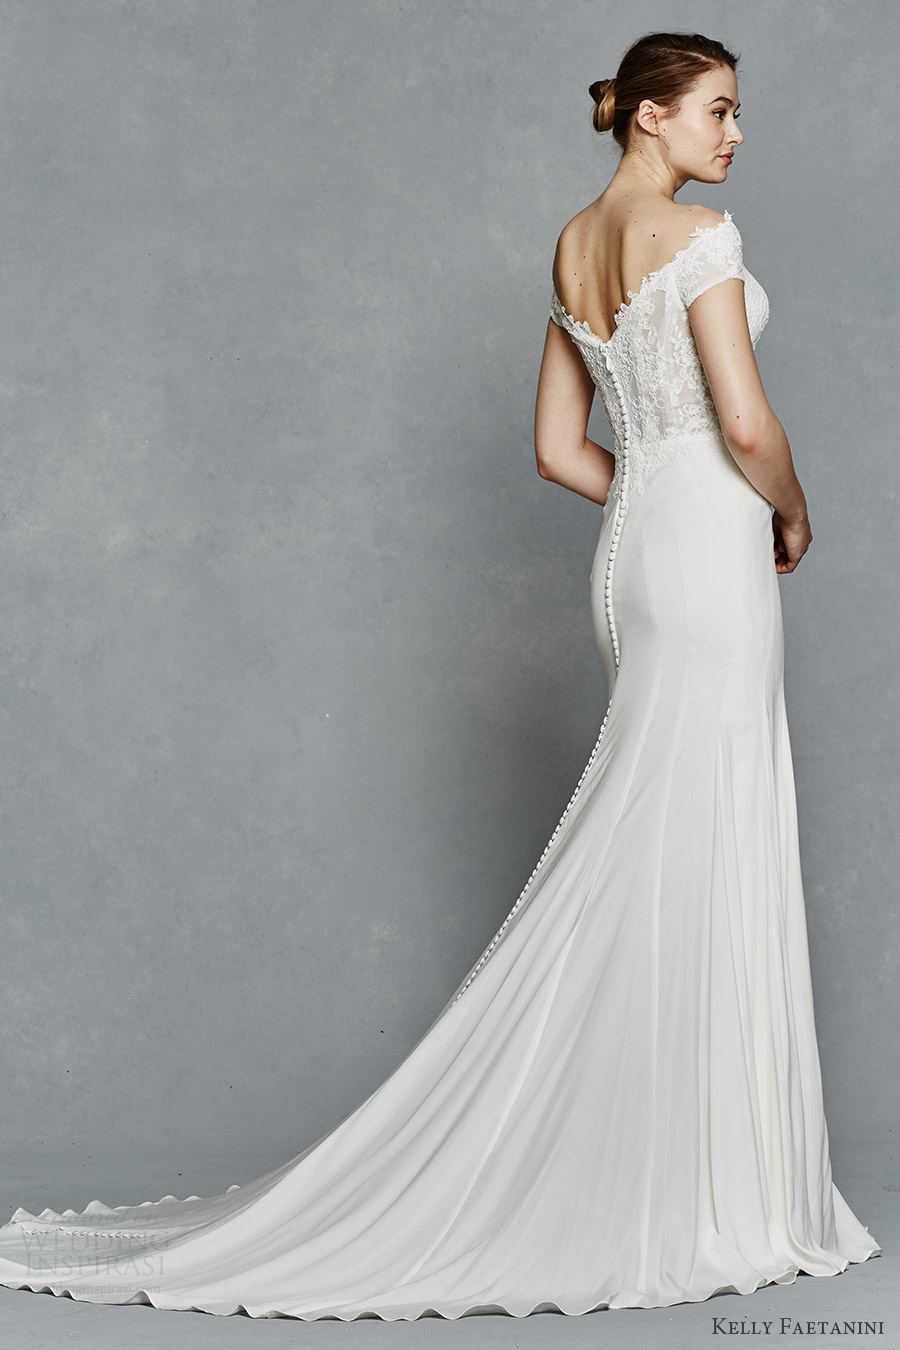 kelly faetanini bridal spring 2017 off shoulder short sleeves illusion bodice fit flare lace wedding dress (antoinette) sv train